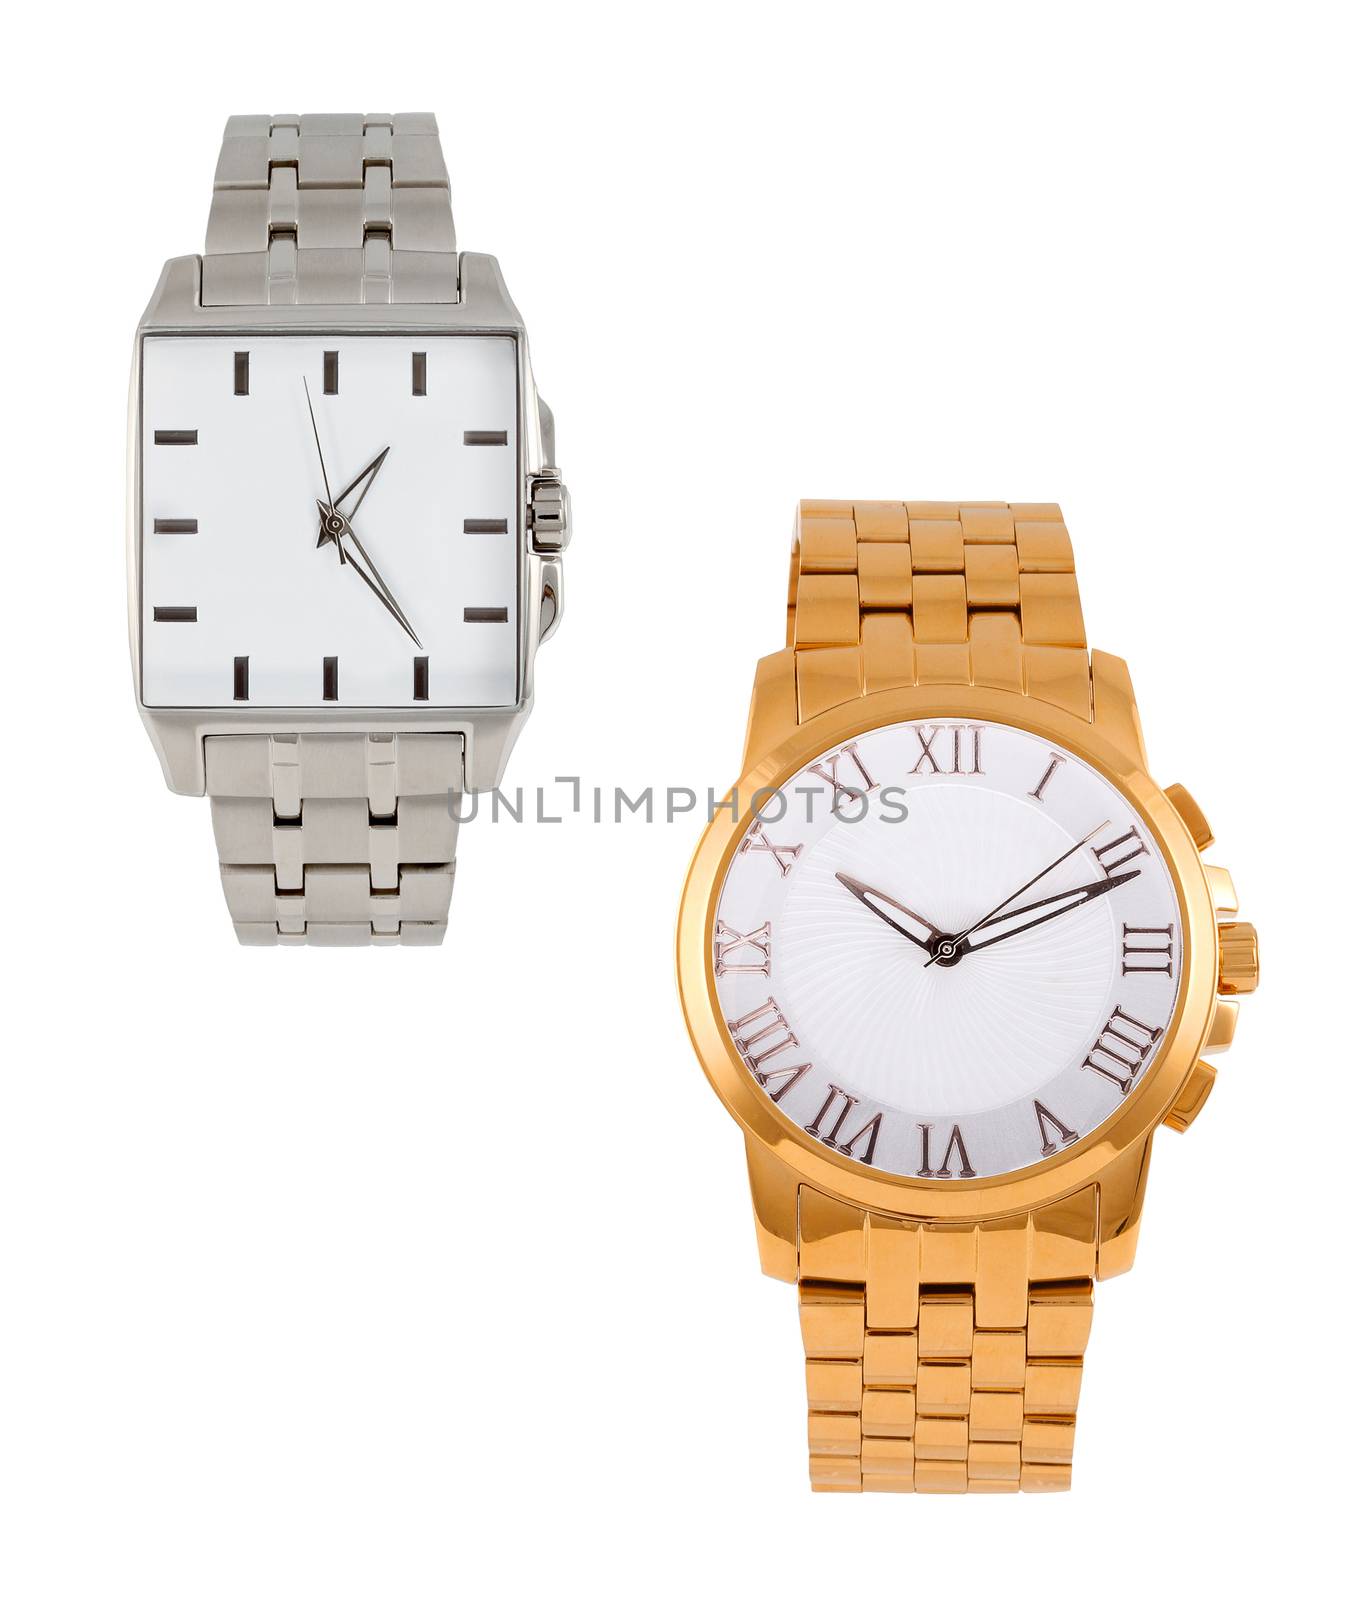 golden and silver modern wrist watch by ozaiachin